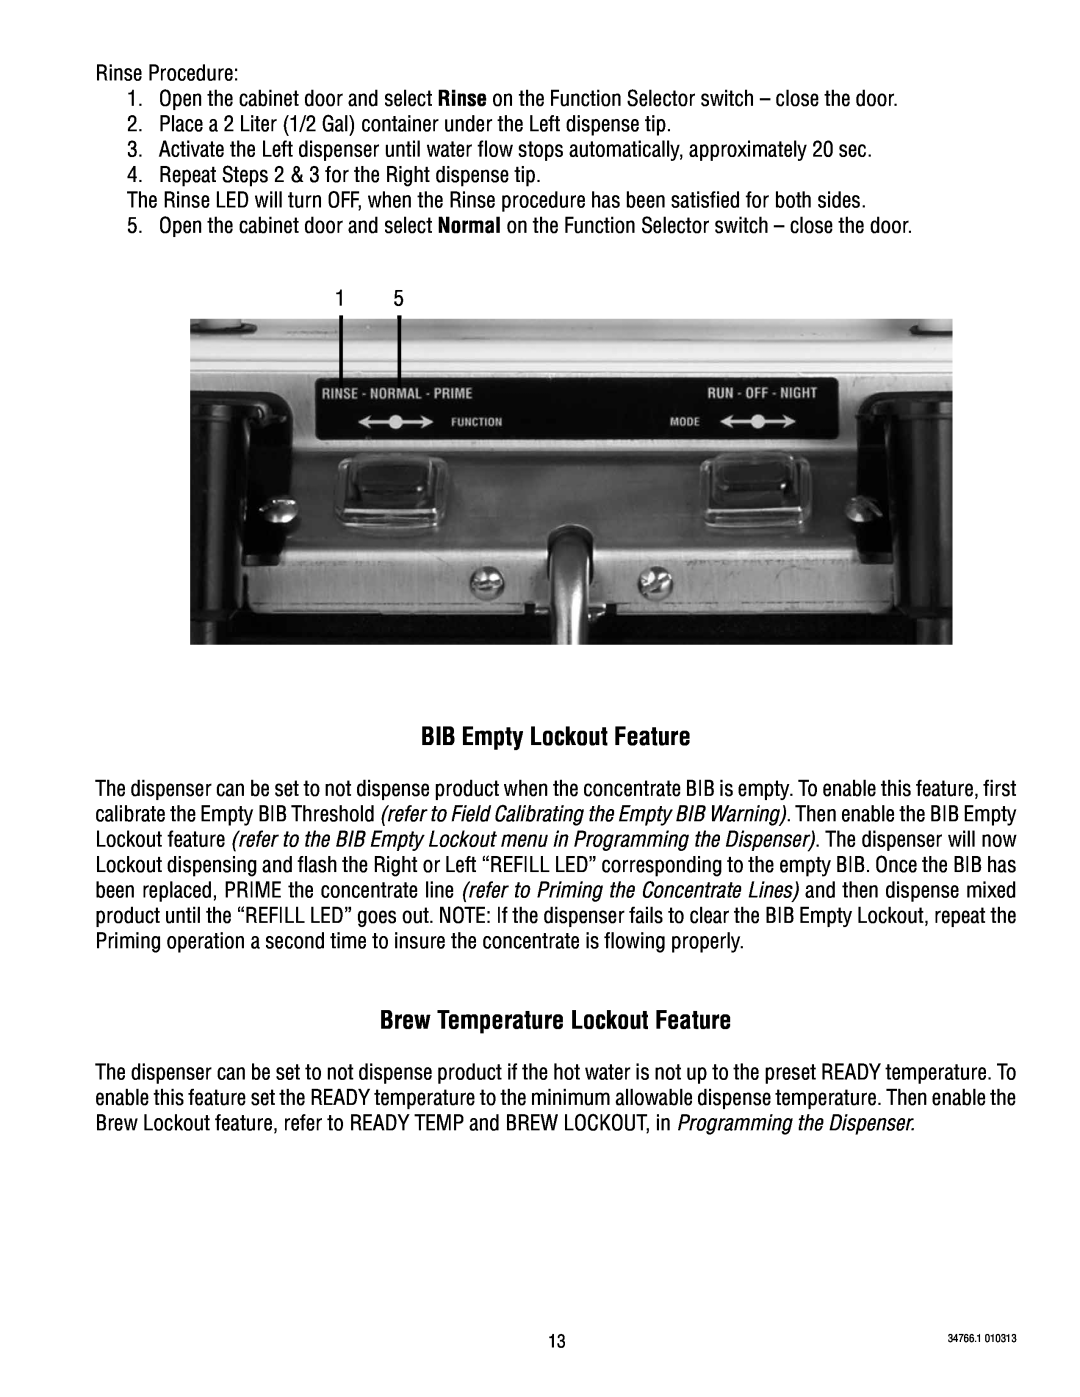 Bunn LCA-2A, LCC-2, LCA-2 PC manual BIB Empty Lockout Feature, Brew Temperature Lockout Feature 